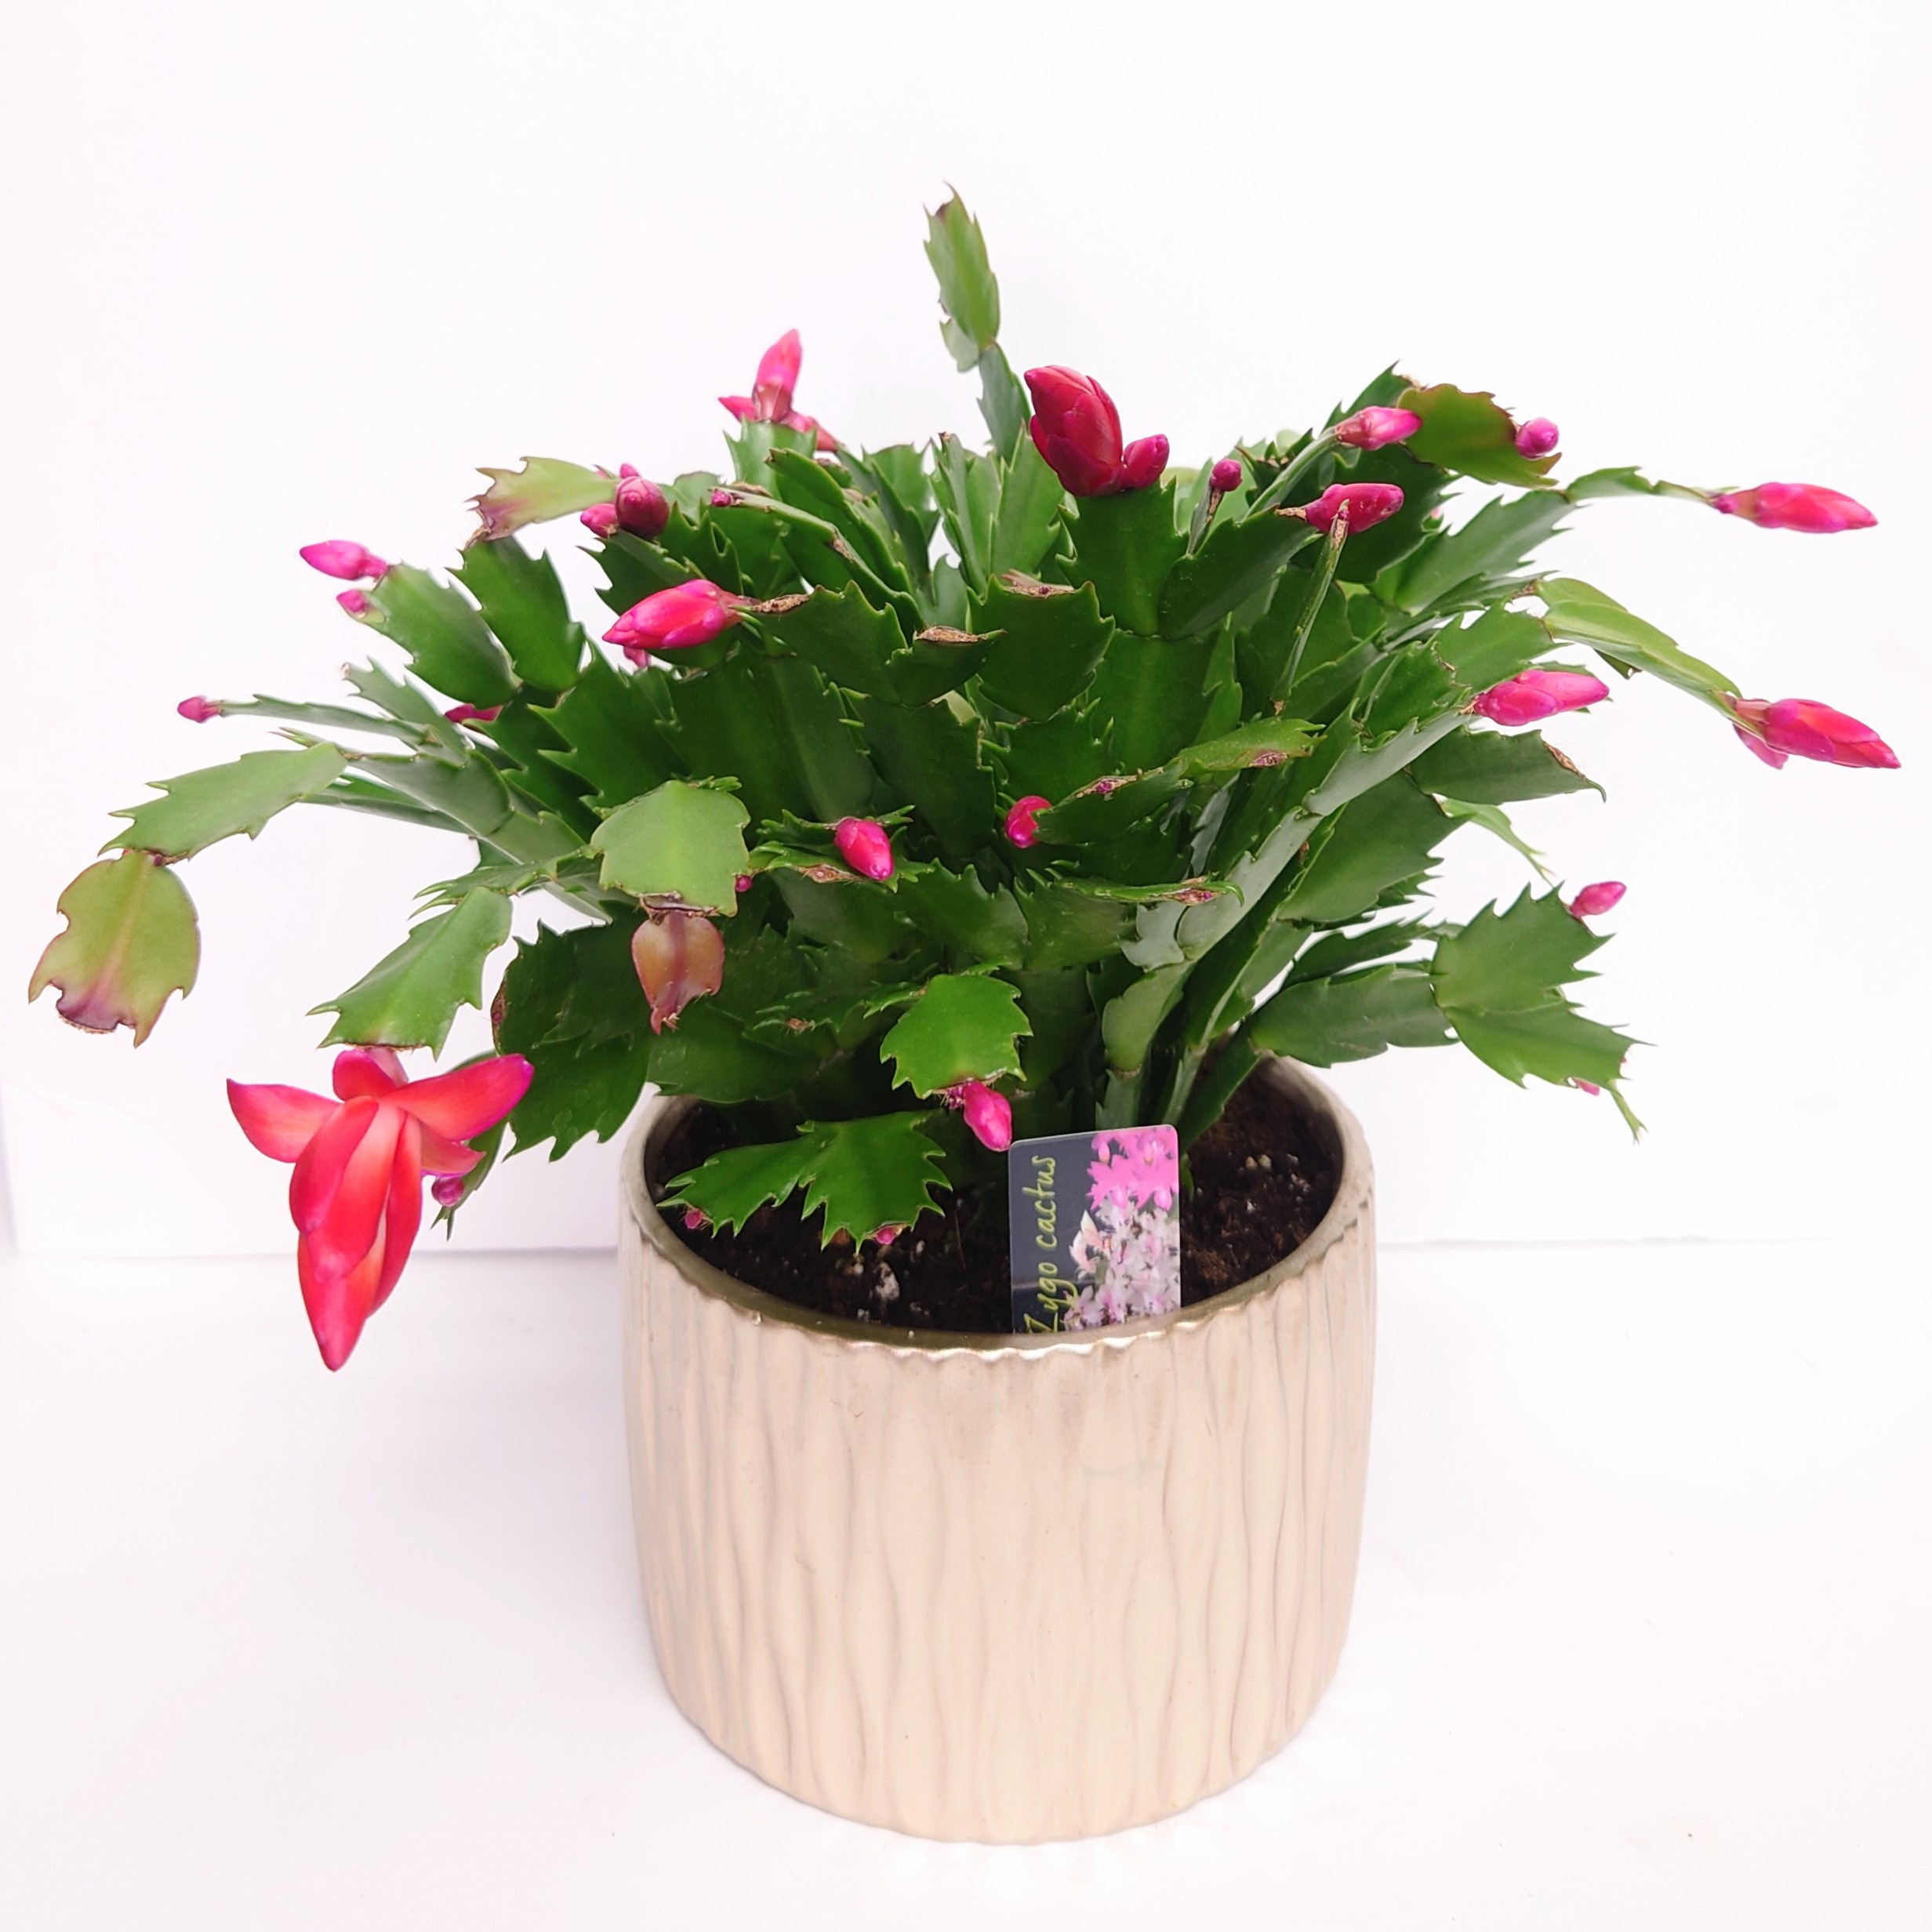 Christmas cactus of the florist's choice